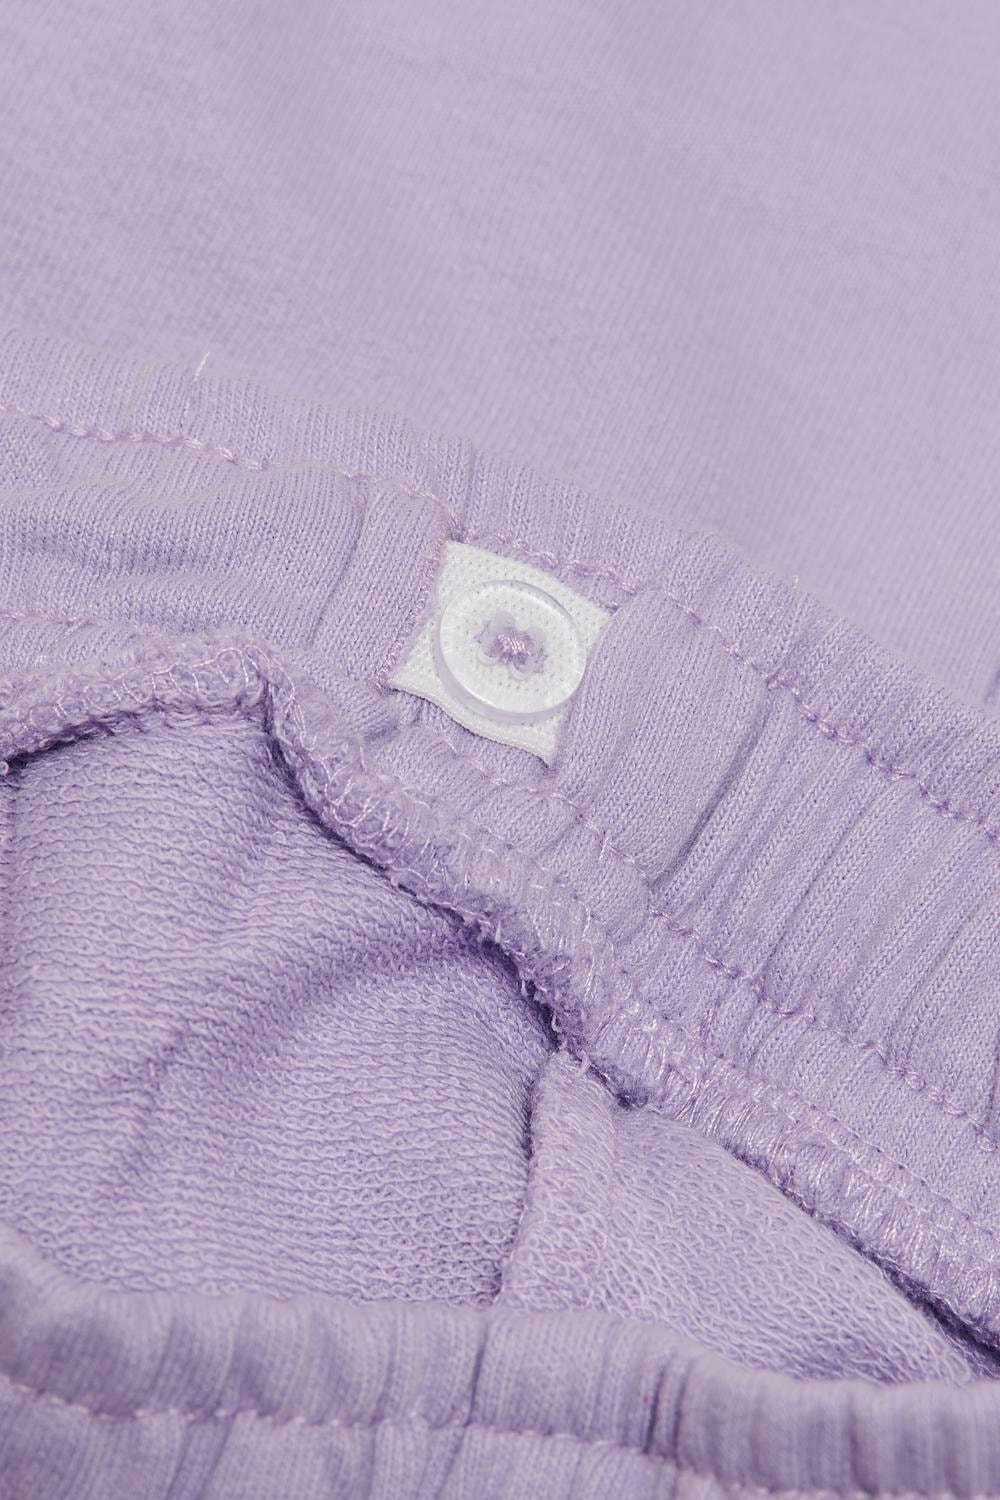 ONLY Pantalones Corte regular Detalle elástico -Purple Rose - 15281471